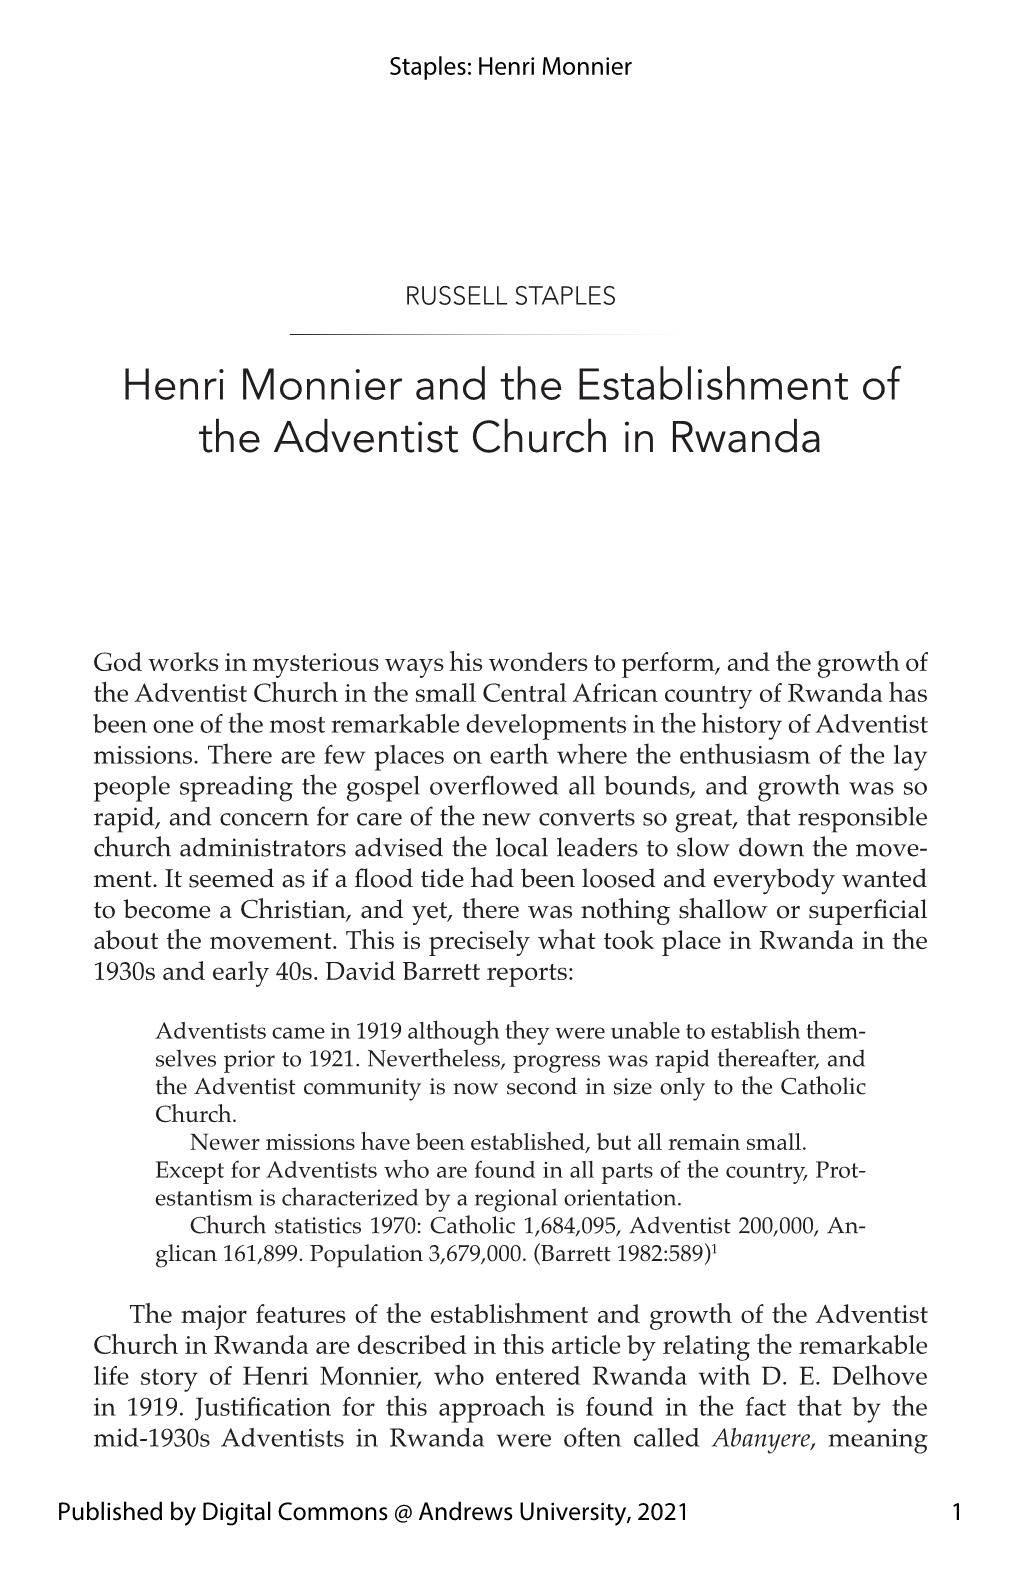 Henri Monnier and the Establishment of the Adventist Church in Rwanda